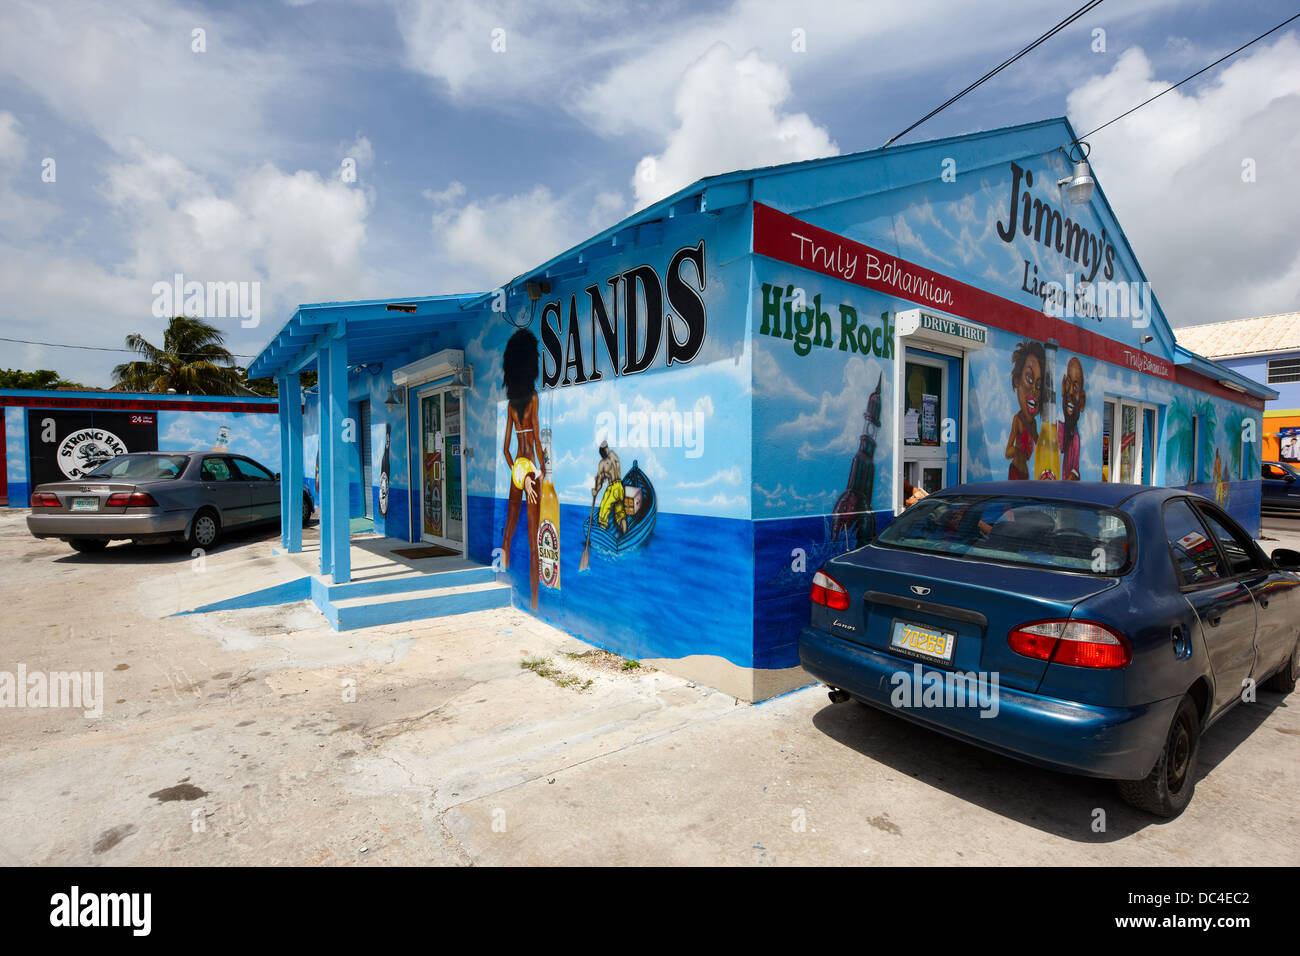 Jimmy's Liquor store (drive through), Nassau, New Providence Island, Bahamas Stock Photo